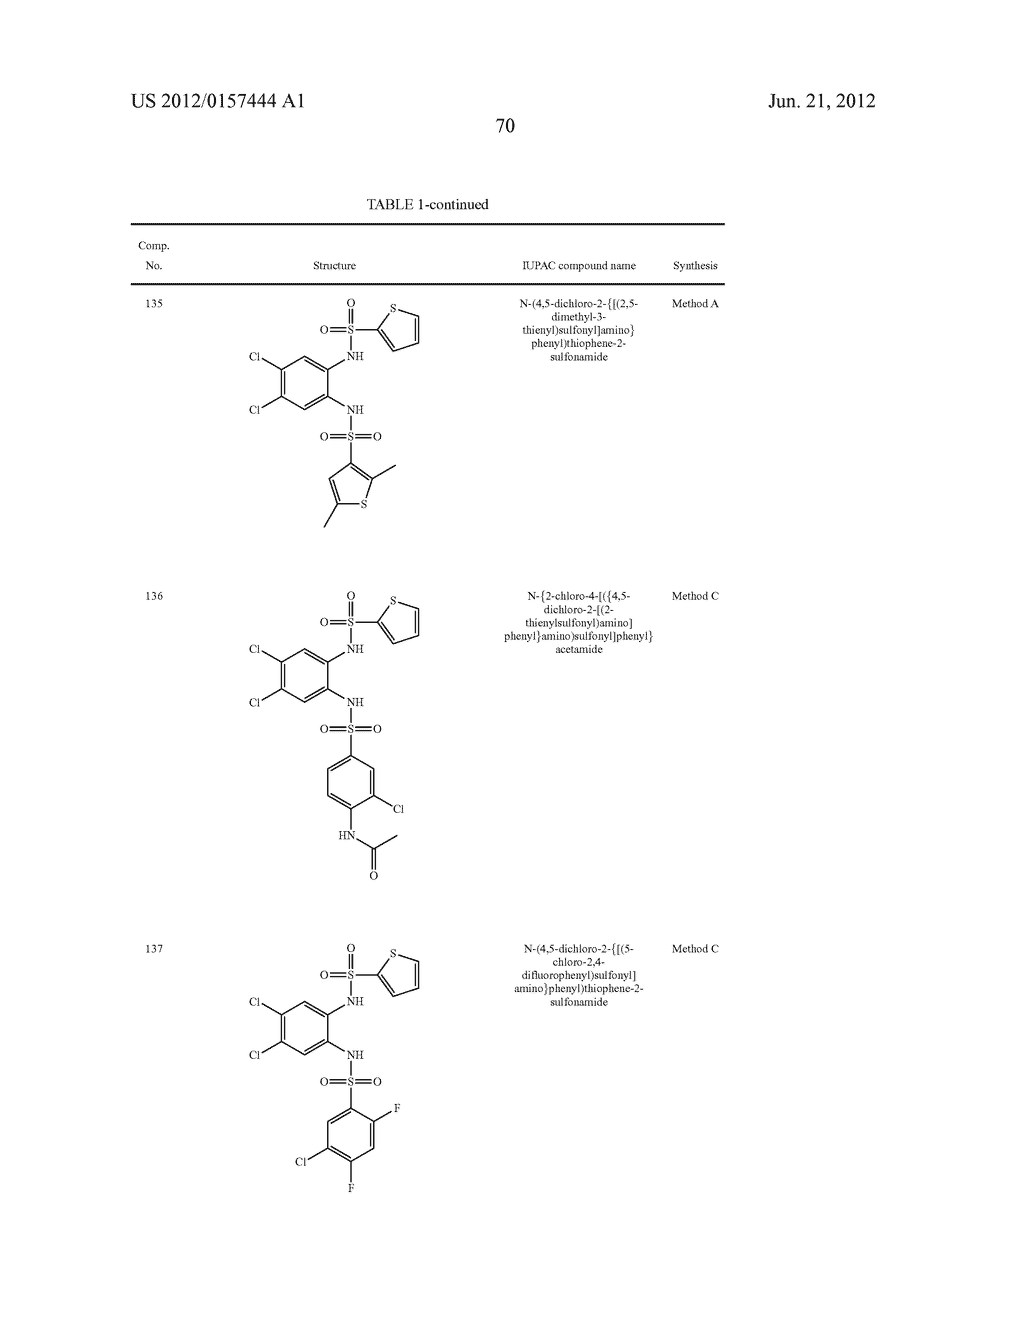 NOVEL 1,2- BIS-SULFONAMIDE DERIVATIVES AS CHEMOKINE RECEPTOR MODULATORS - diagram, schematic, and image 71